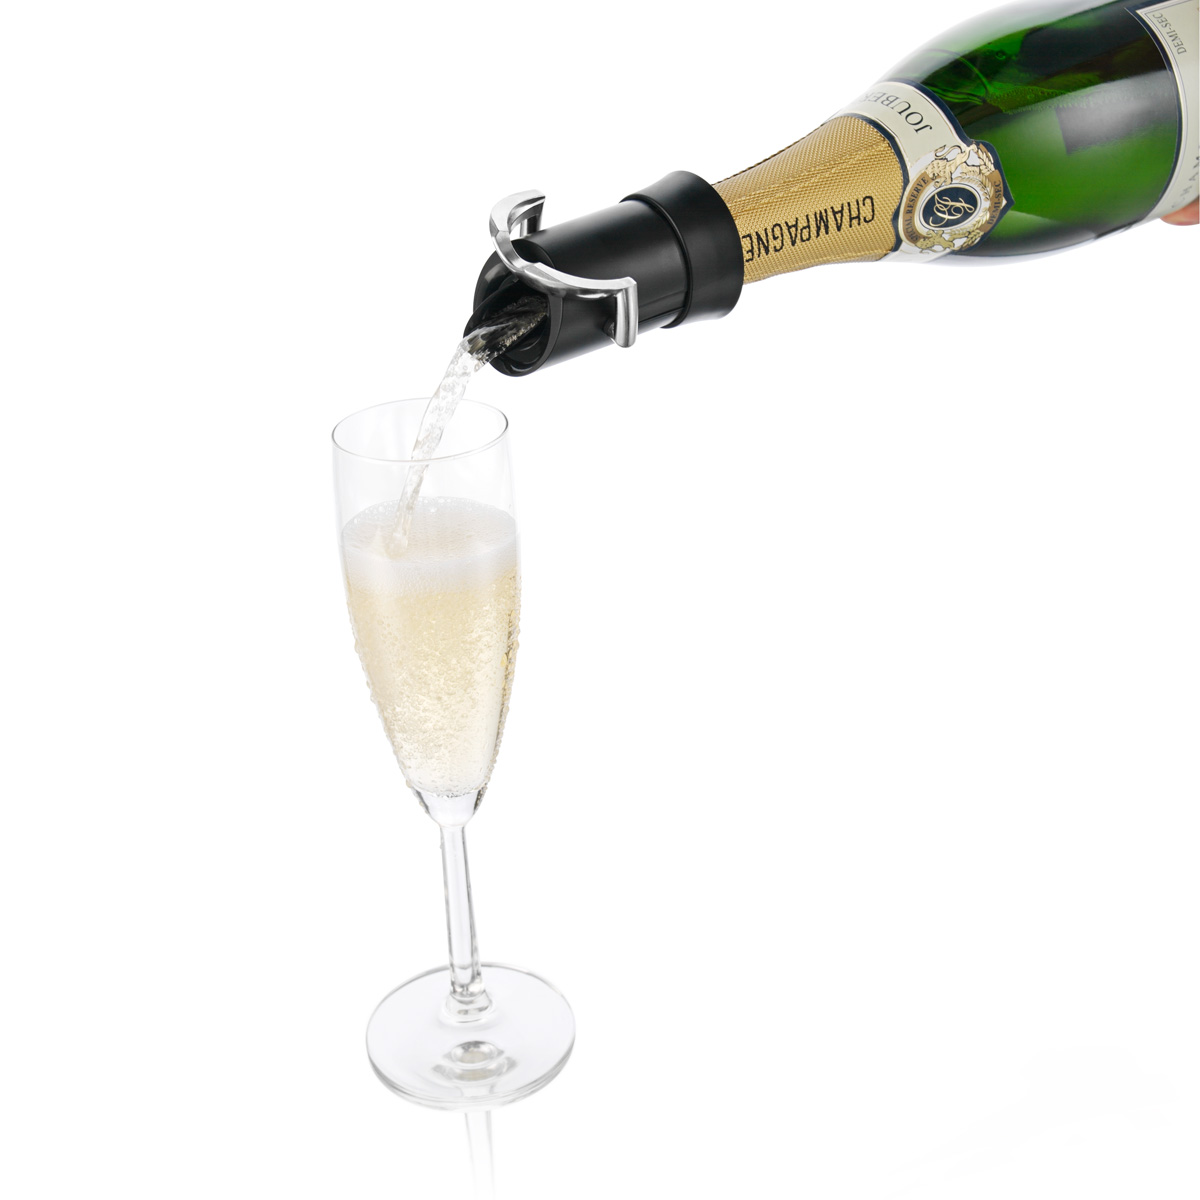 Vacu Vin Champagne Saver Product Image 1